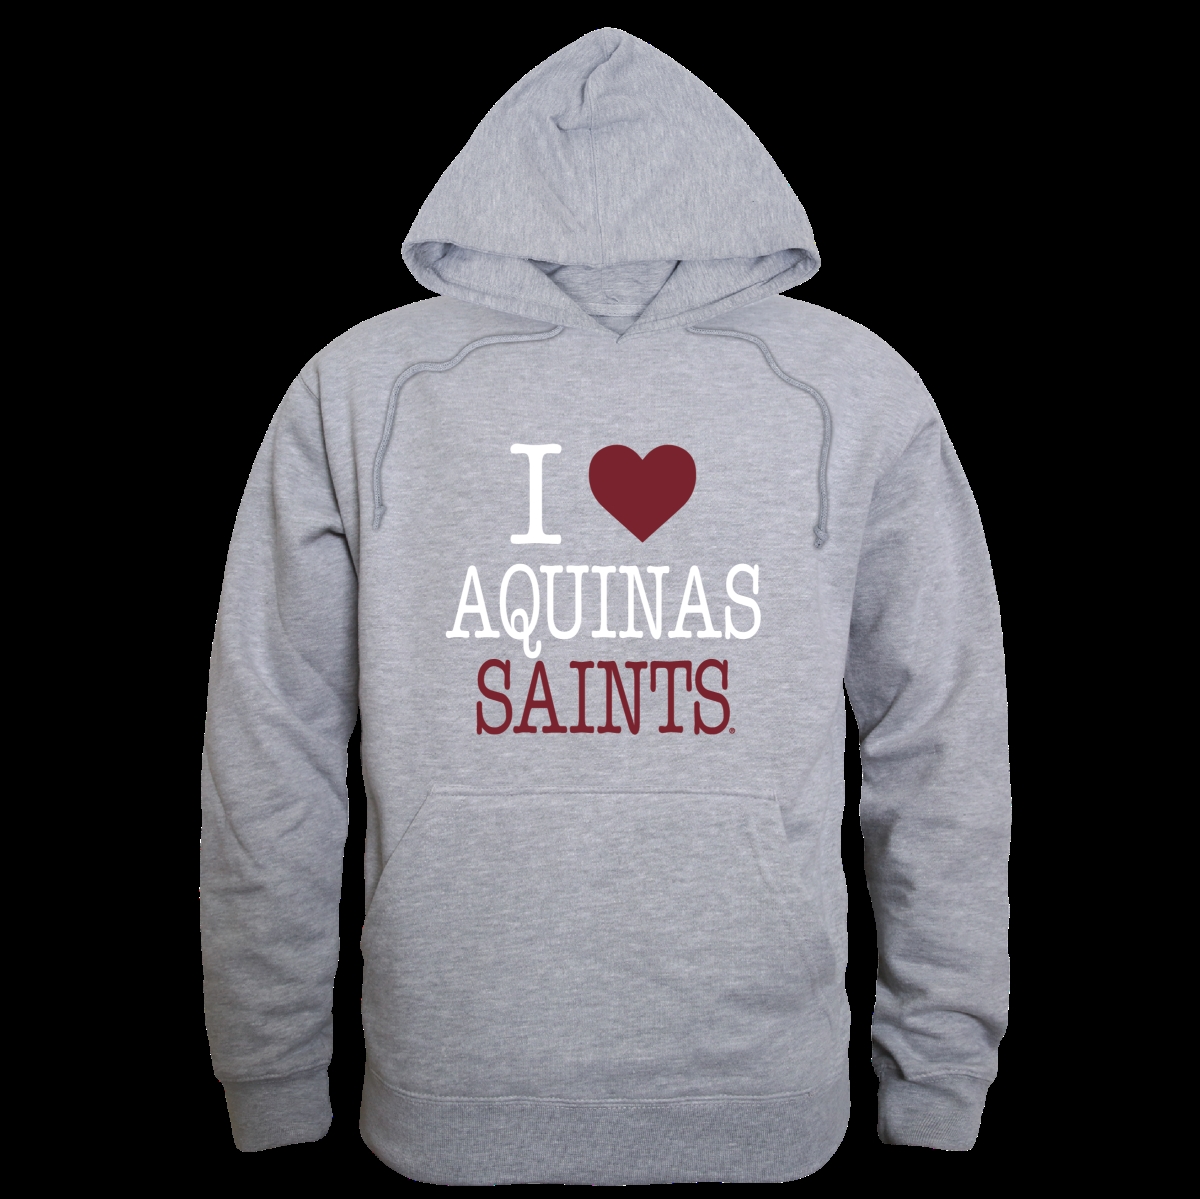 W Republic 553-611-HGY-02 Aquinas College Saints I Love Hoodie&#44; Heather Grey - Medium